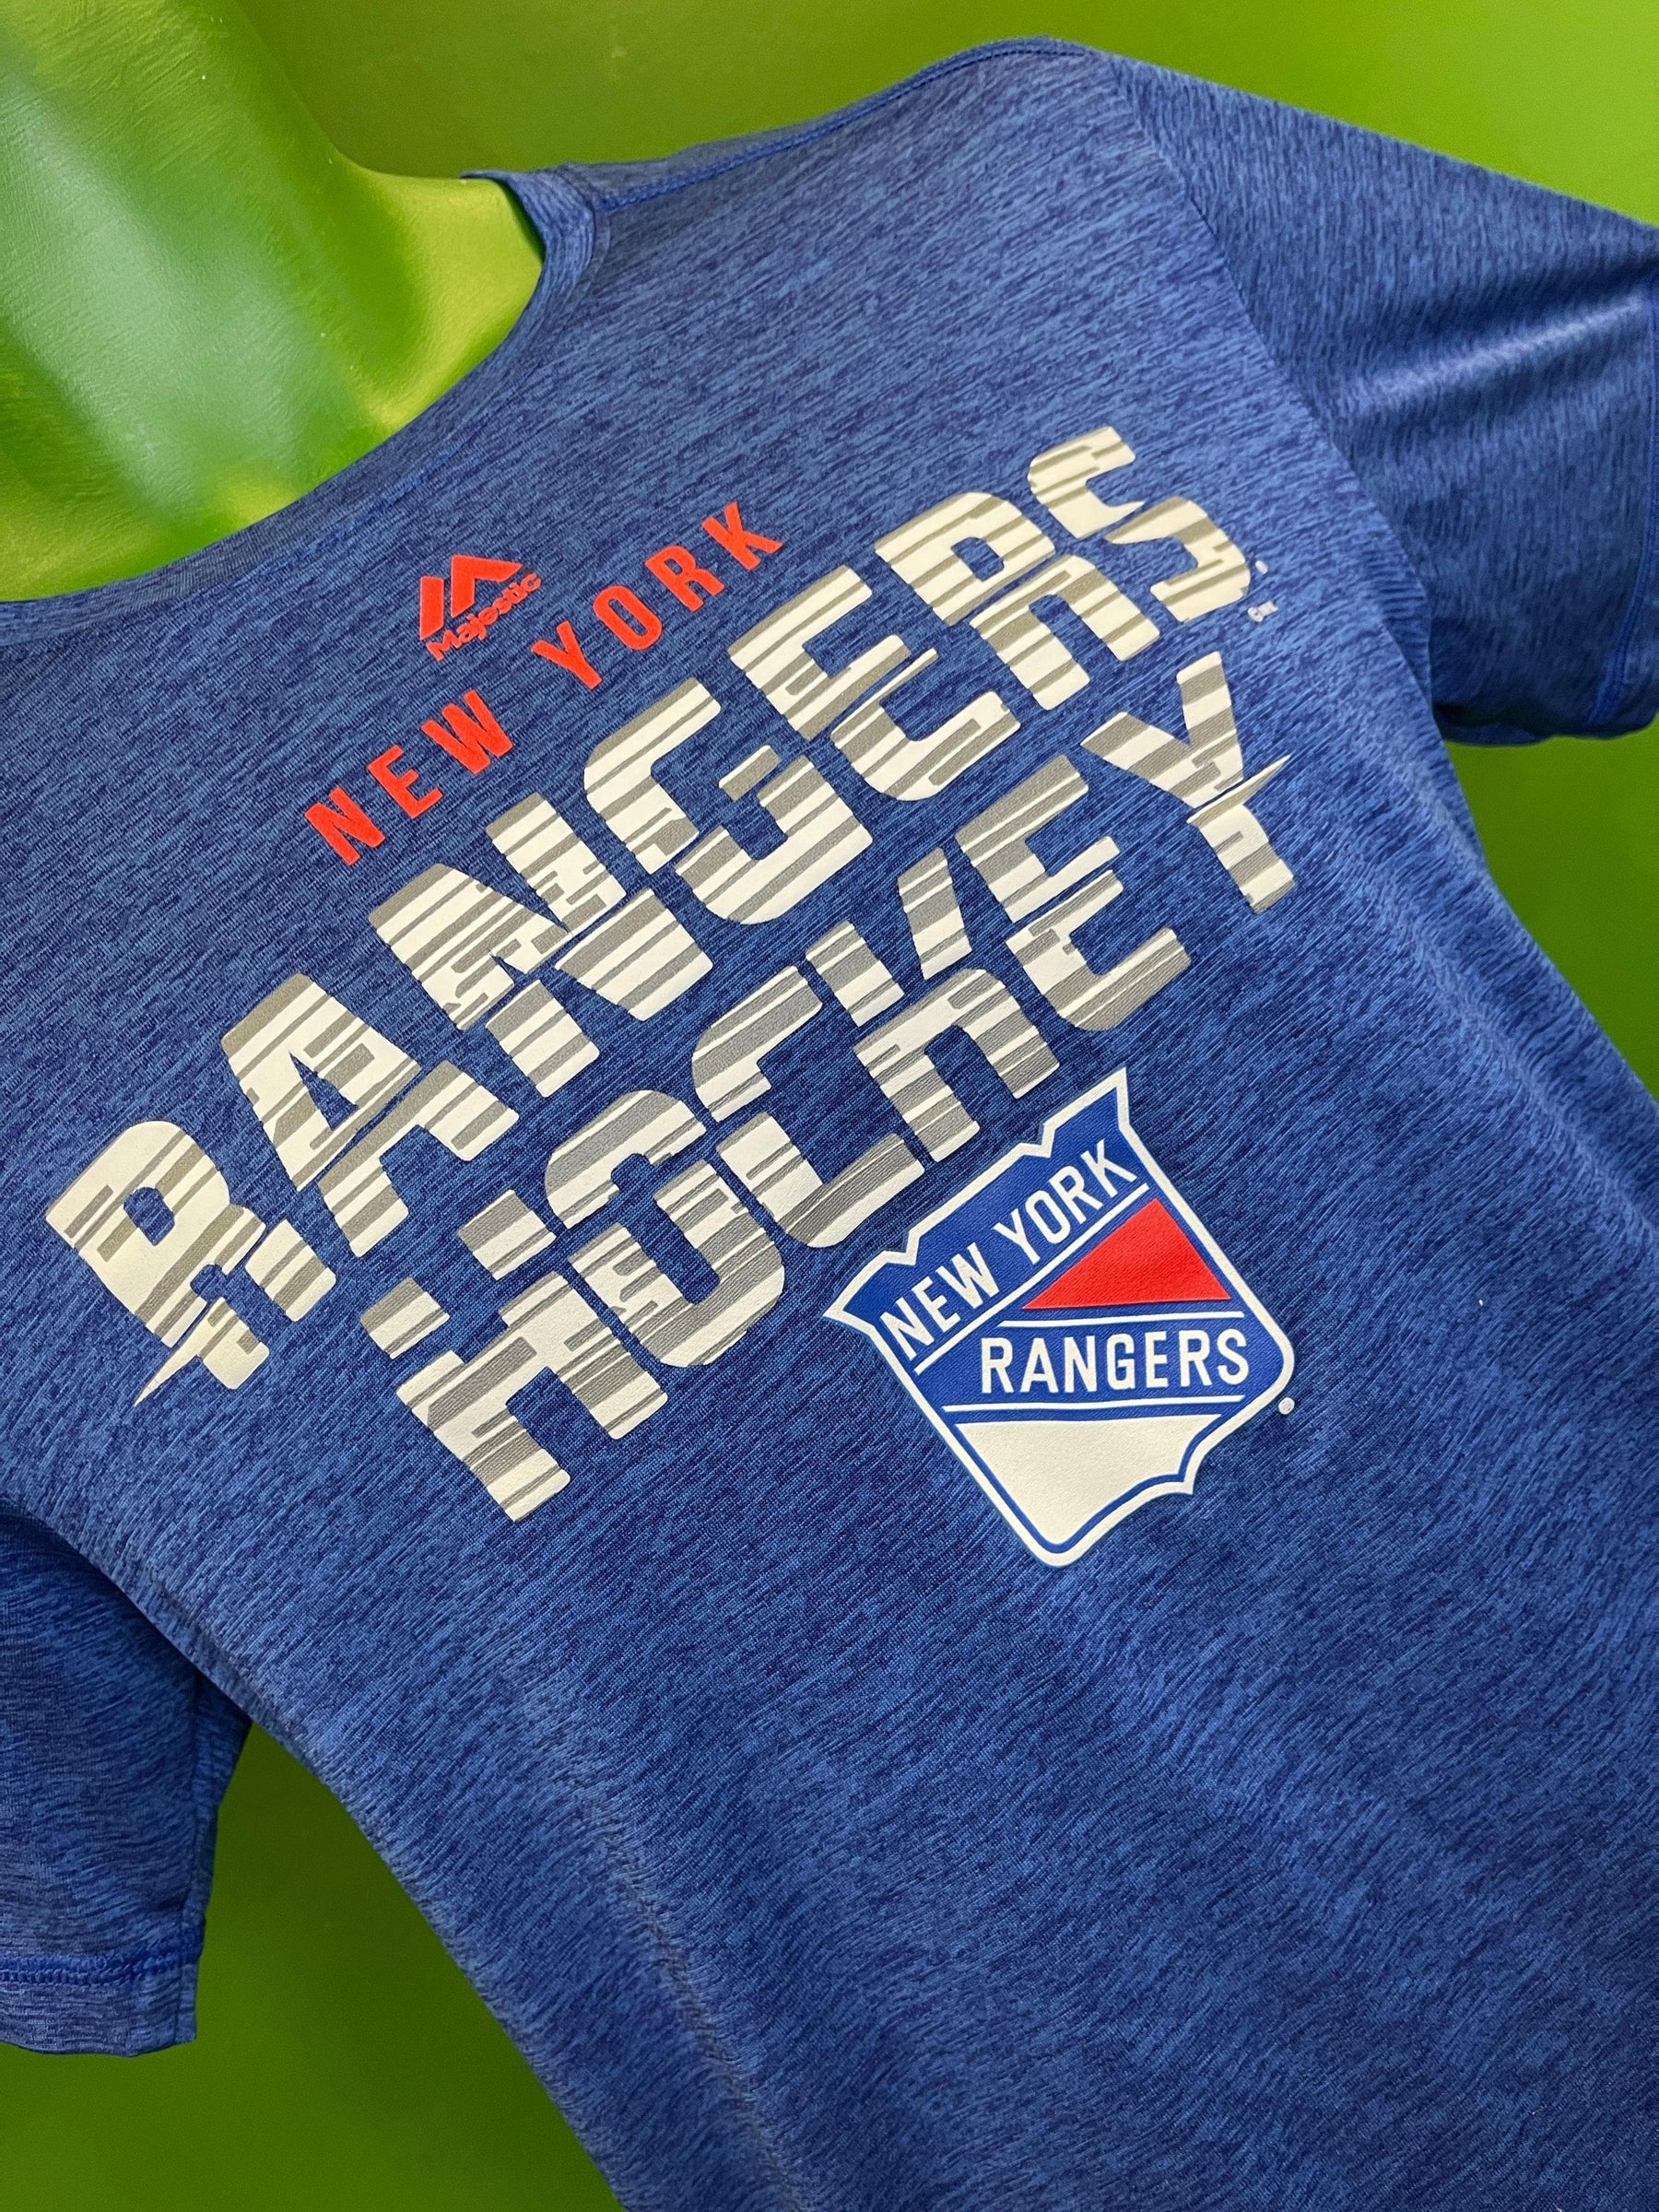 NHL New York Rangers Blue Sports T-Shirt Men's Small